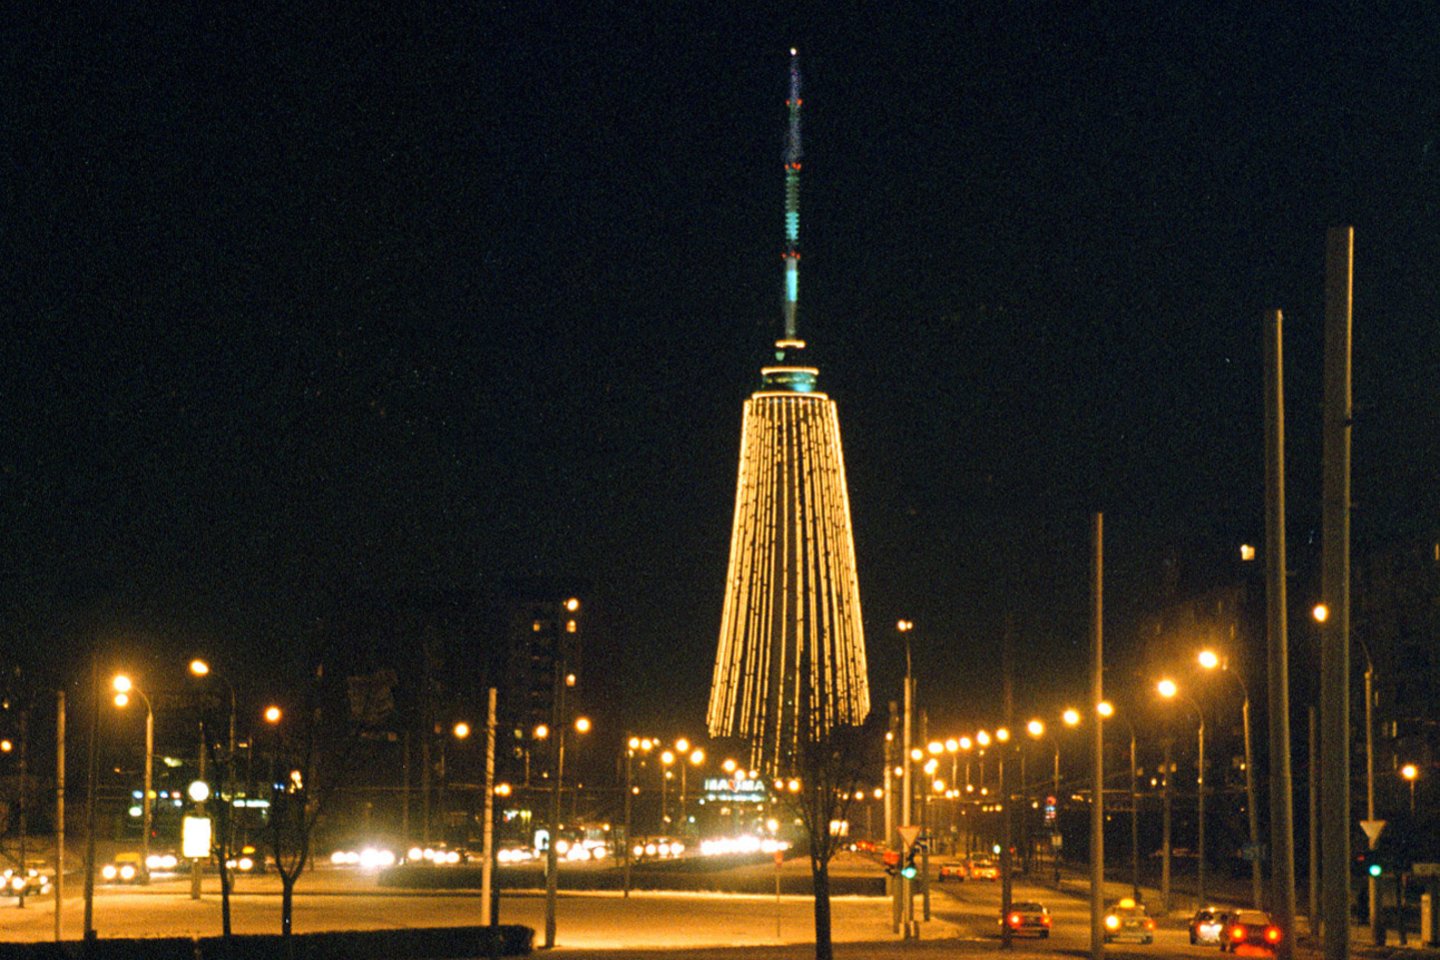  Vilniaus televizijos bokštas. 1999-ieji.<br> V.Ščiavinsko nuotr.